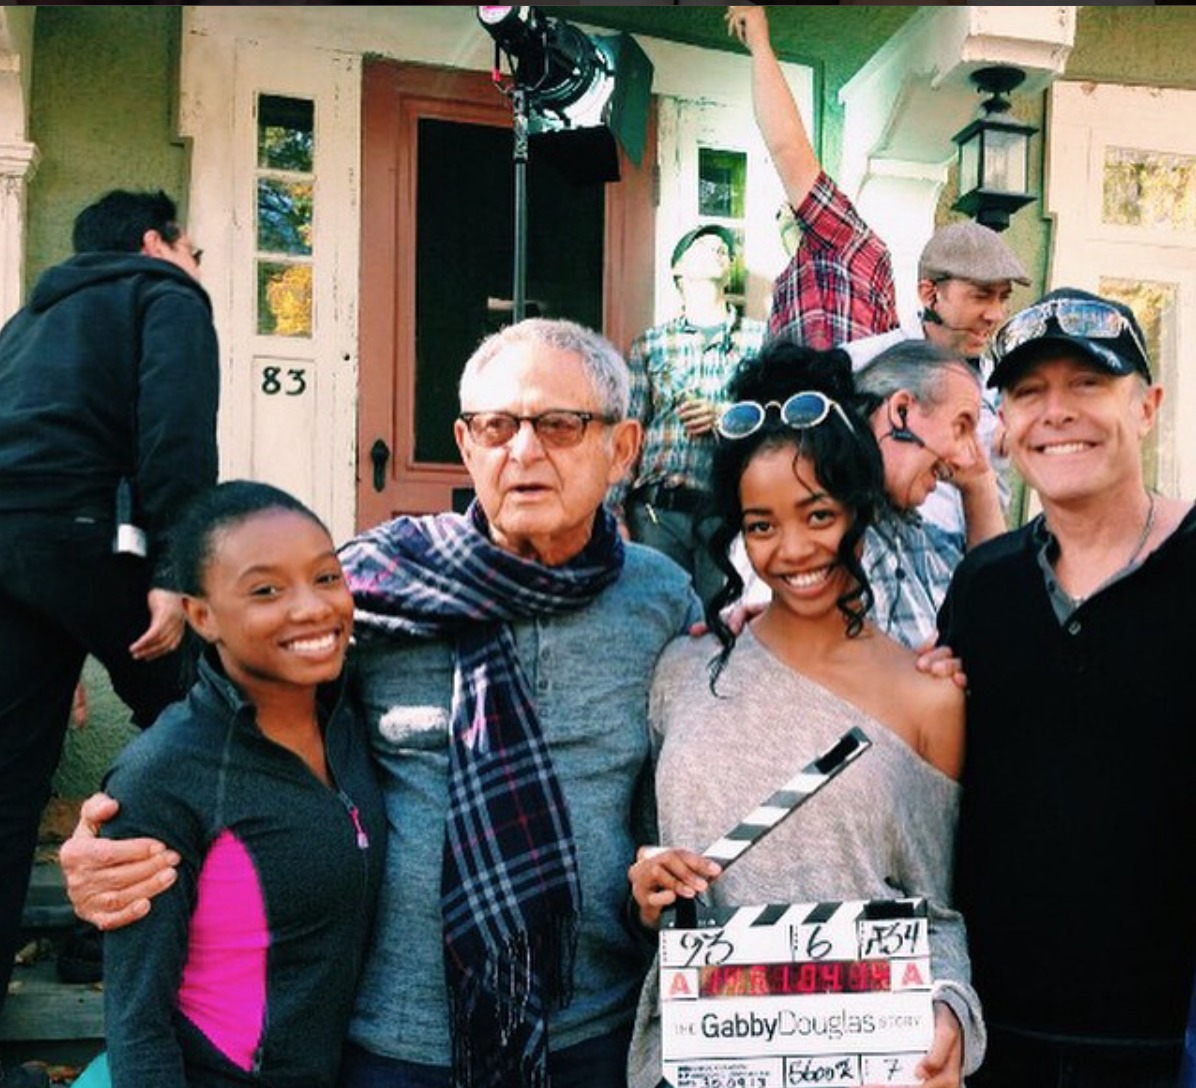 Kyal Legend with Imani Hakim, producer Zev Braun, and Director Gregg Champion on set of 